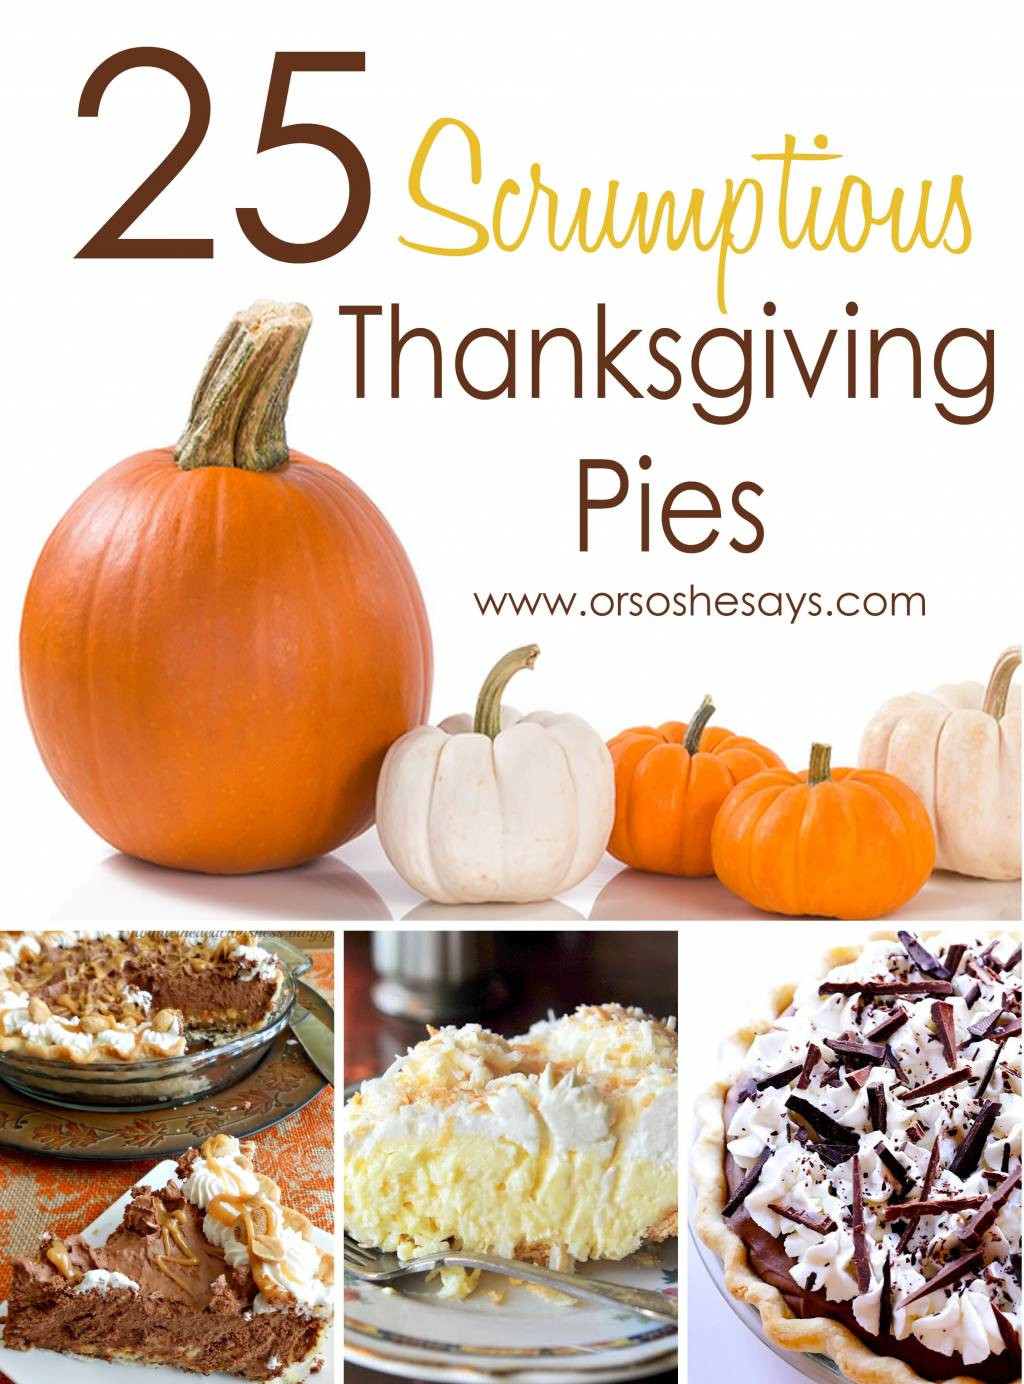 Thanksgiving Pie Recipes
 25 Scrumptious Thanksgiving Pies she Mariah so she